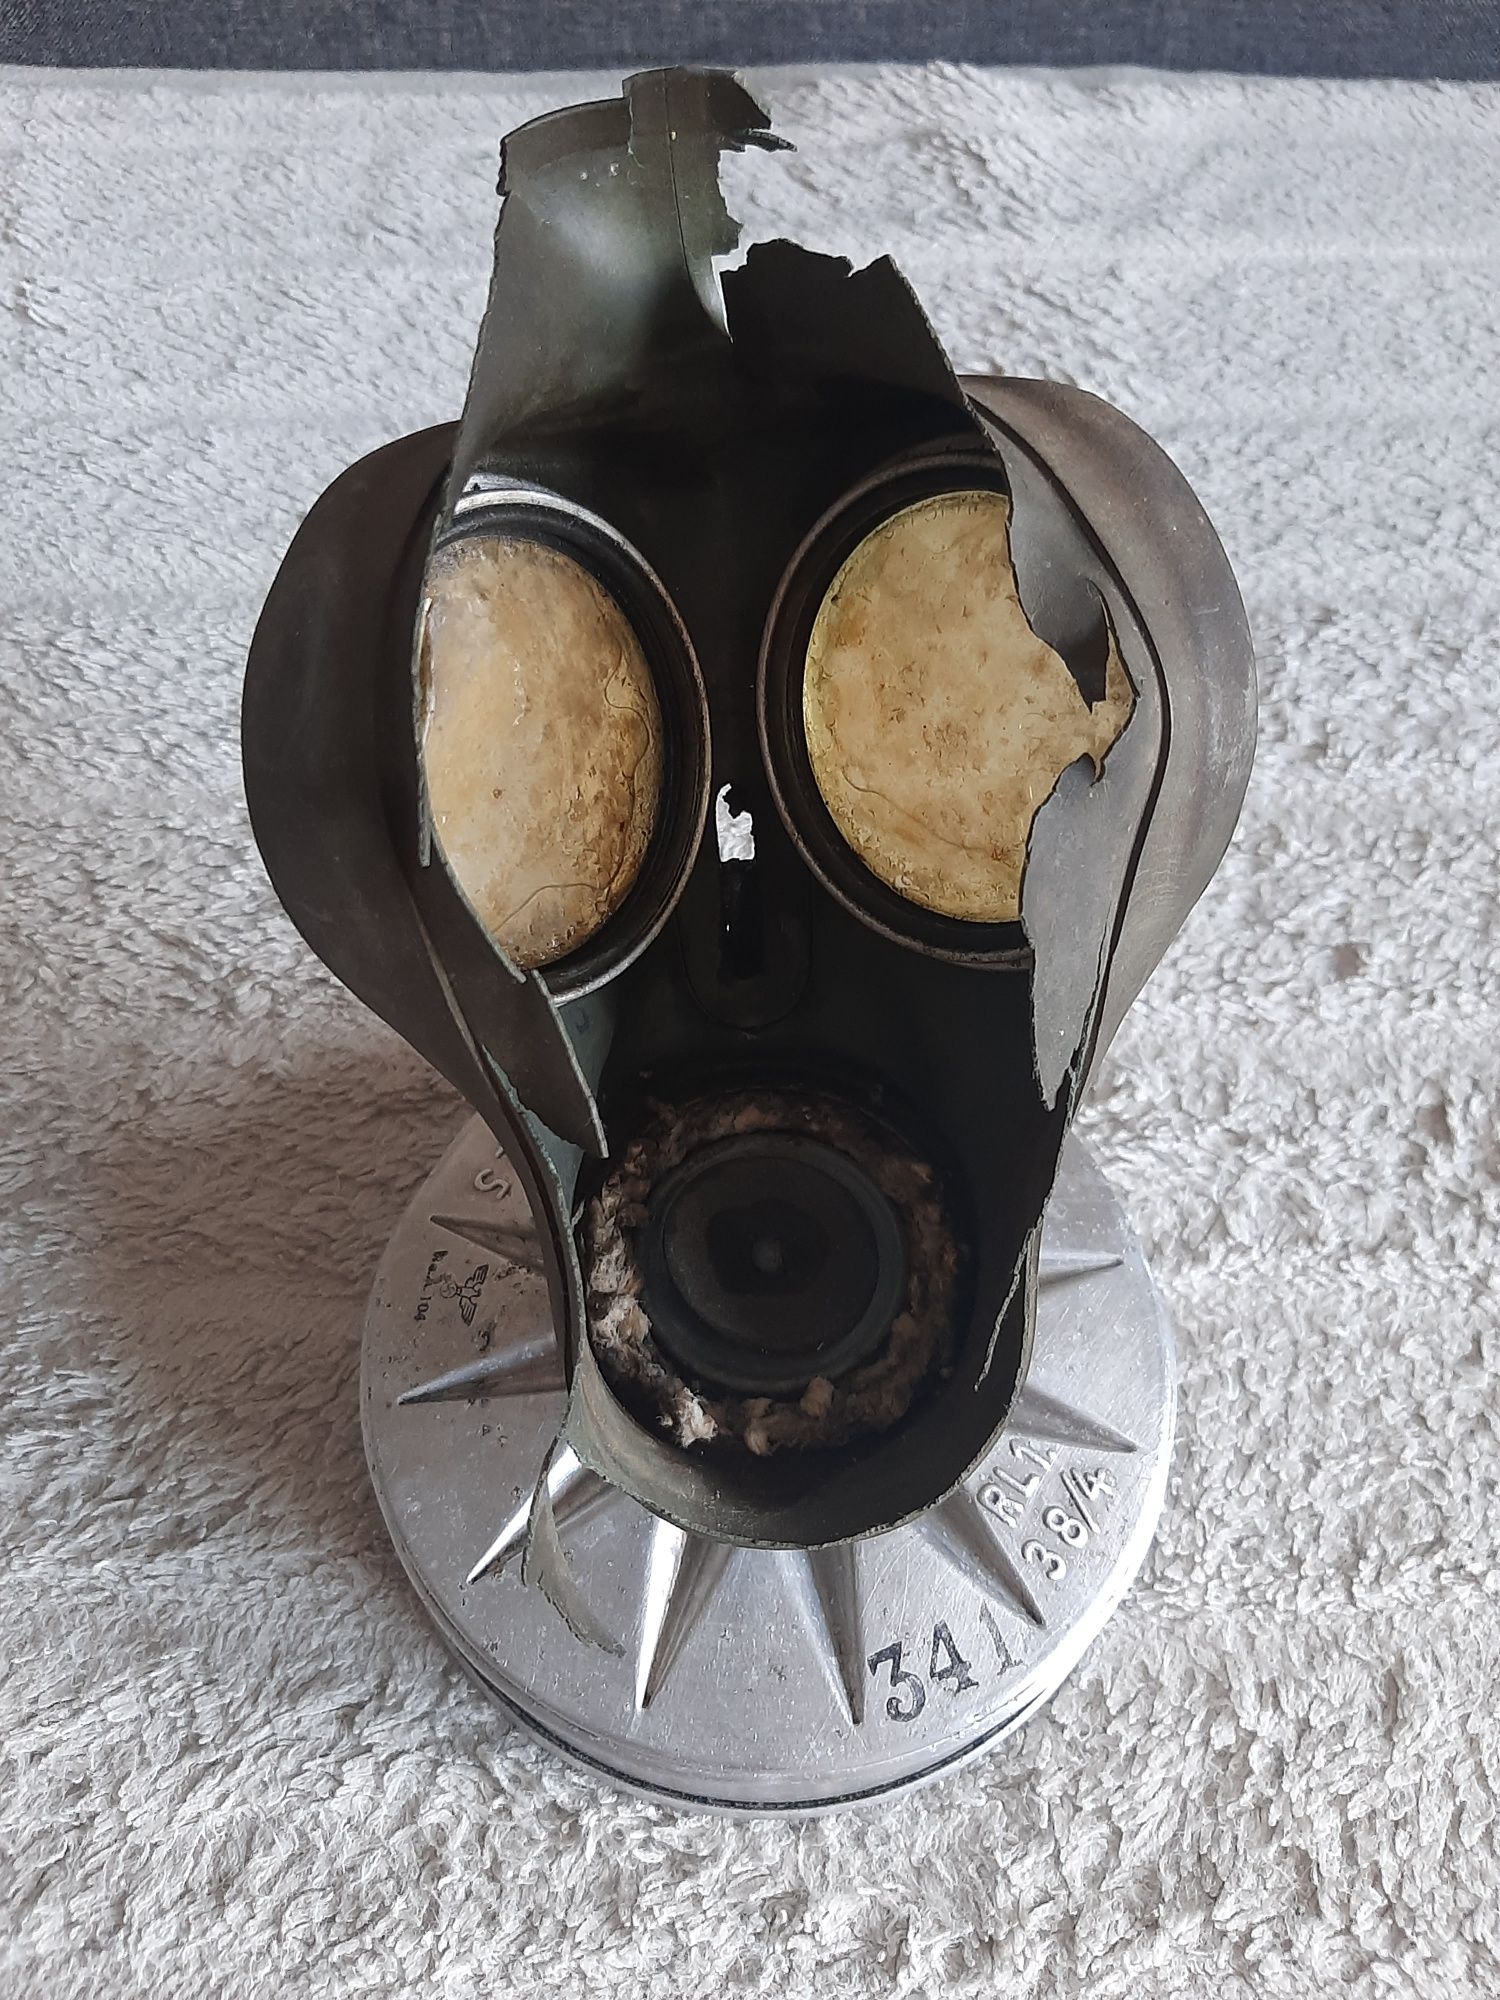 Filtr maski przeciwgazowej Luftsuchutz -RL1.38/4 (maska gratis)